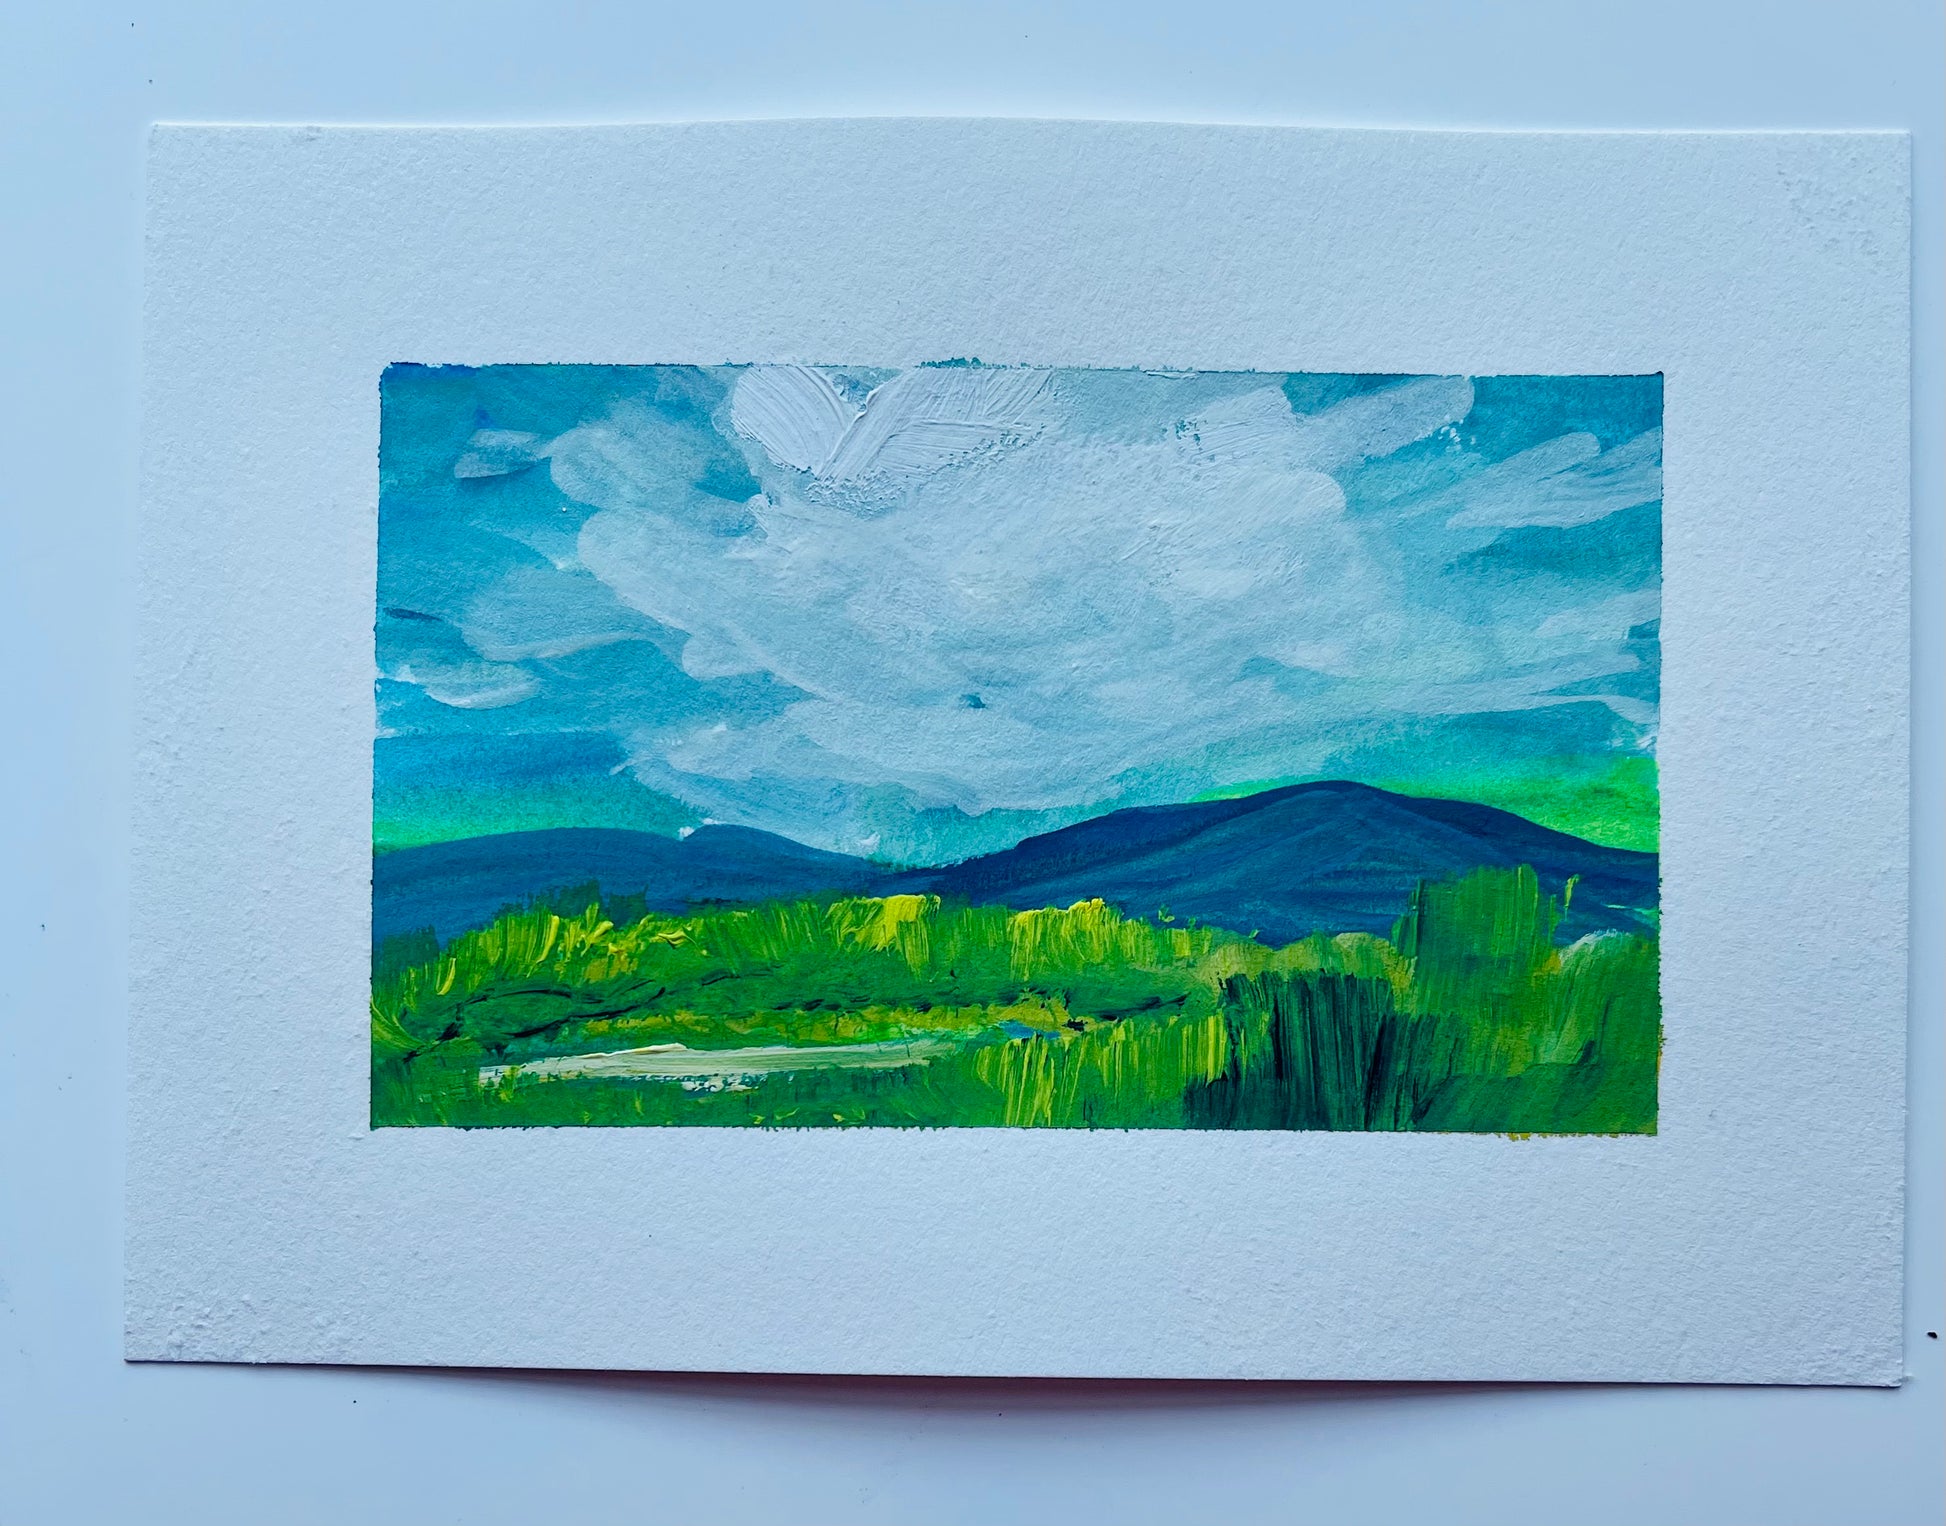 6x6-sally-j-goodrich-flush-of-joy-blue-ridge-mountains-painting